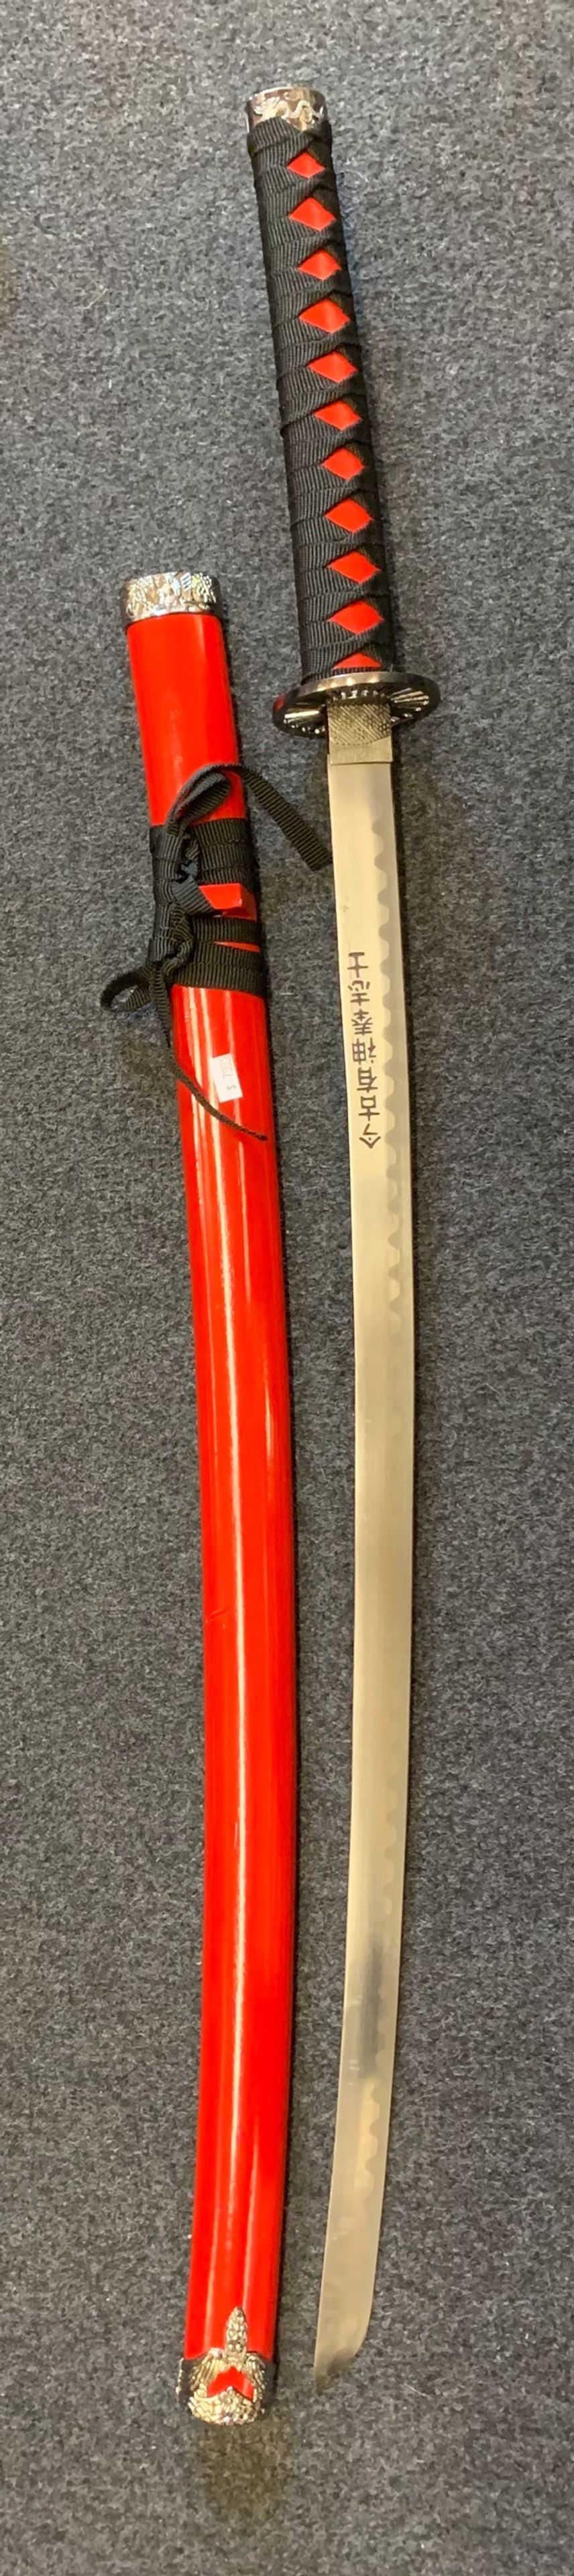 Katana sword red and black fabric wrapped handle $79